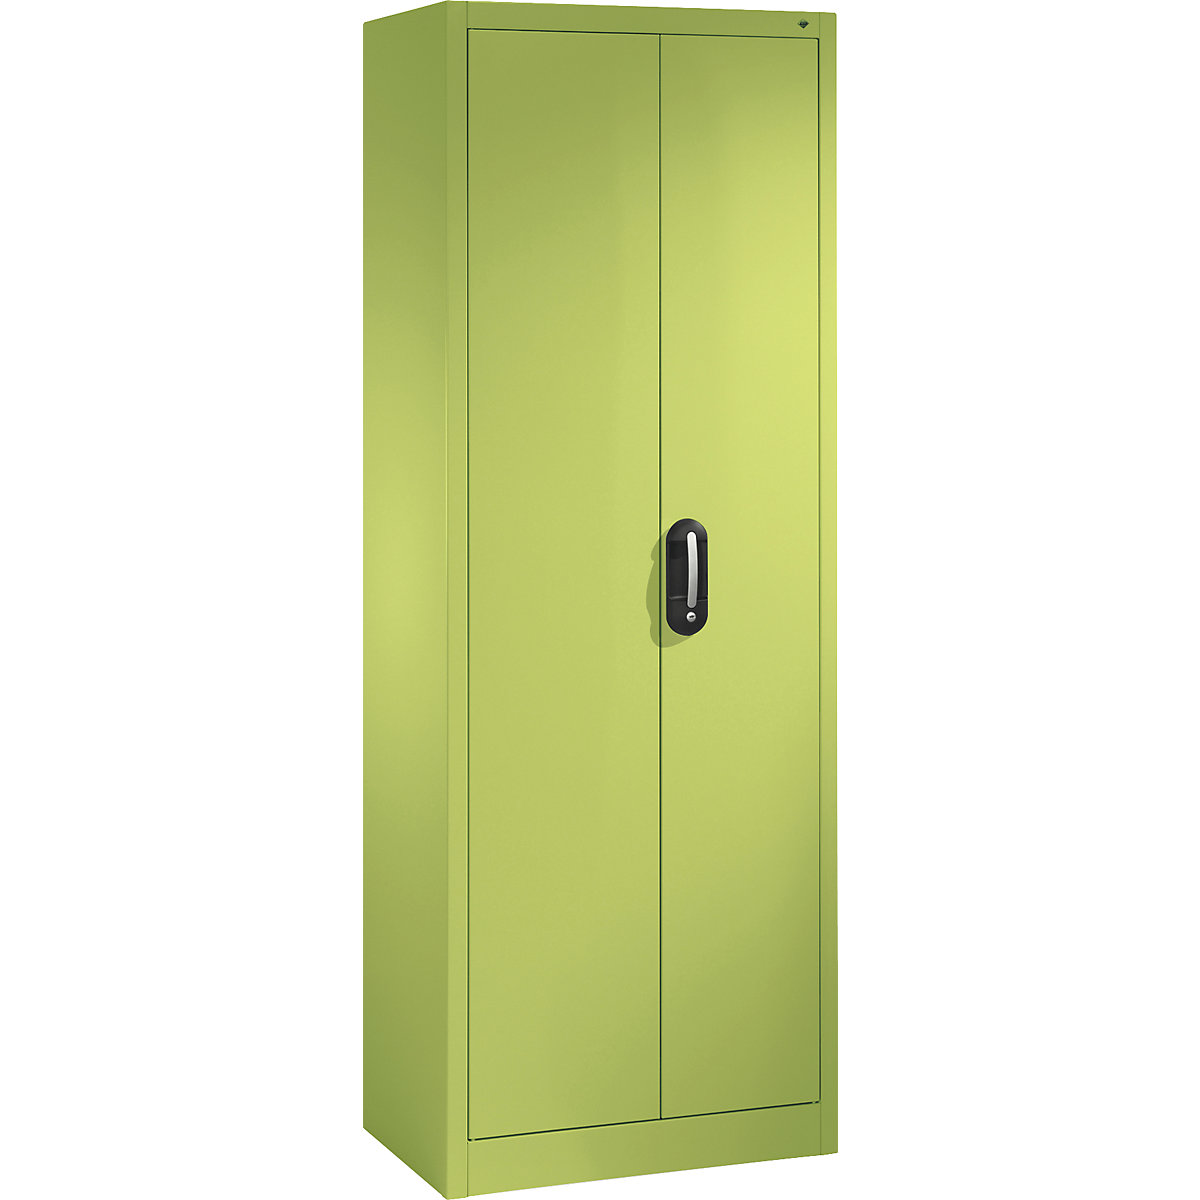 ACURADO universal cupboard – C+P, WxD 700 x 400 mm, viridian green / viridian green-22